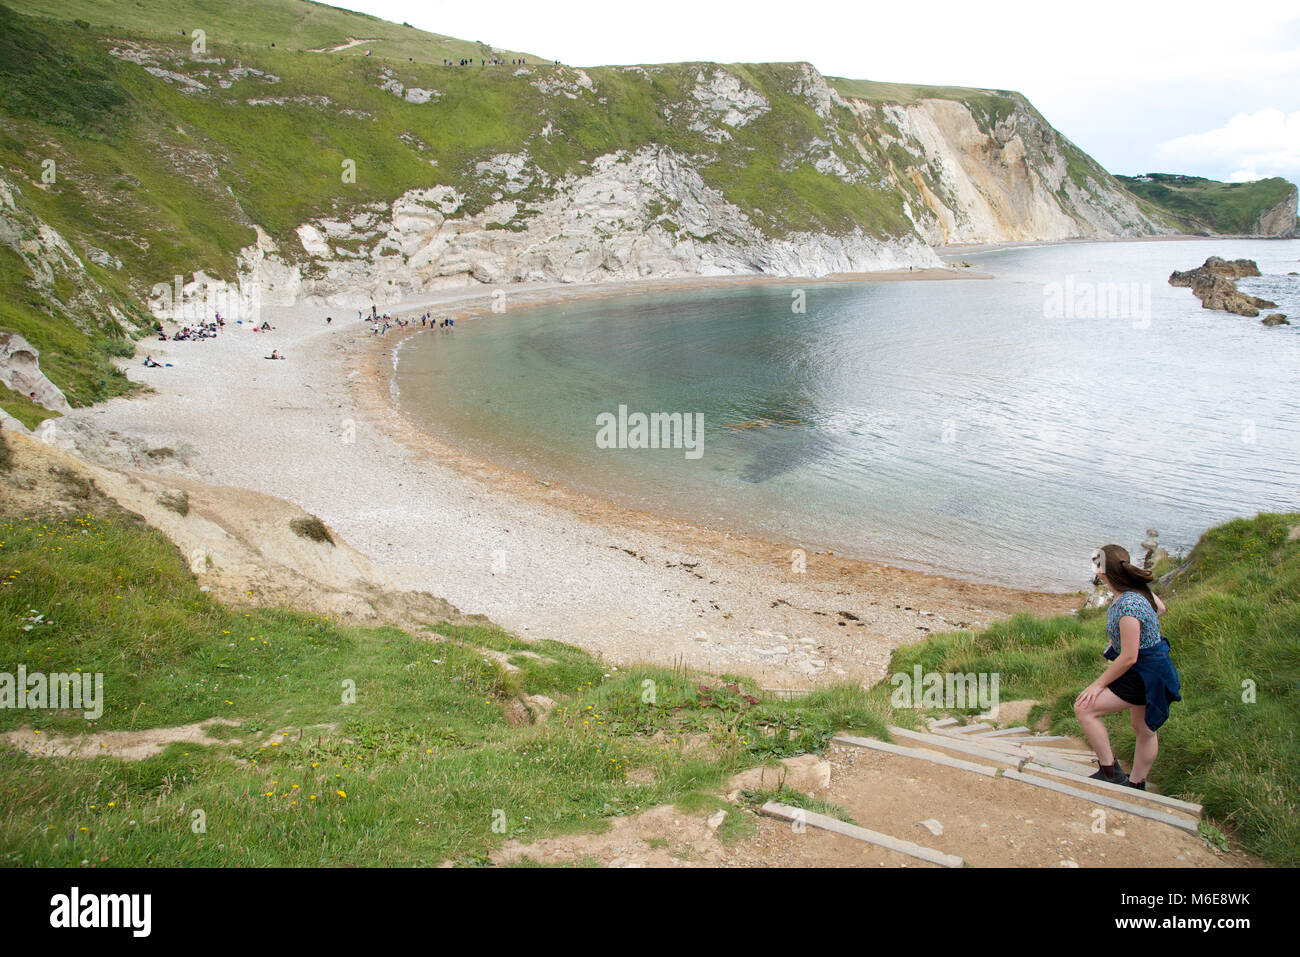 A young woman admiring the view at Man O'War Bay, Dorset, England Stock Photo